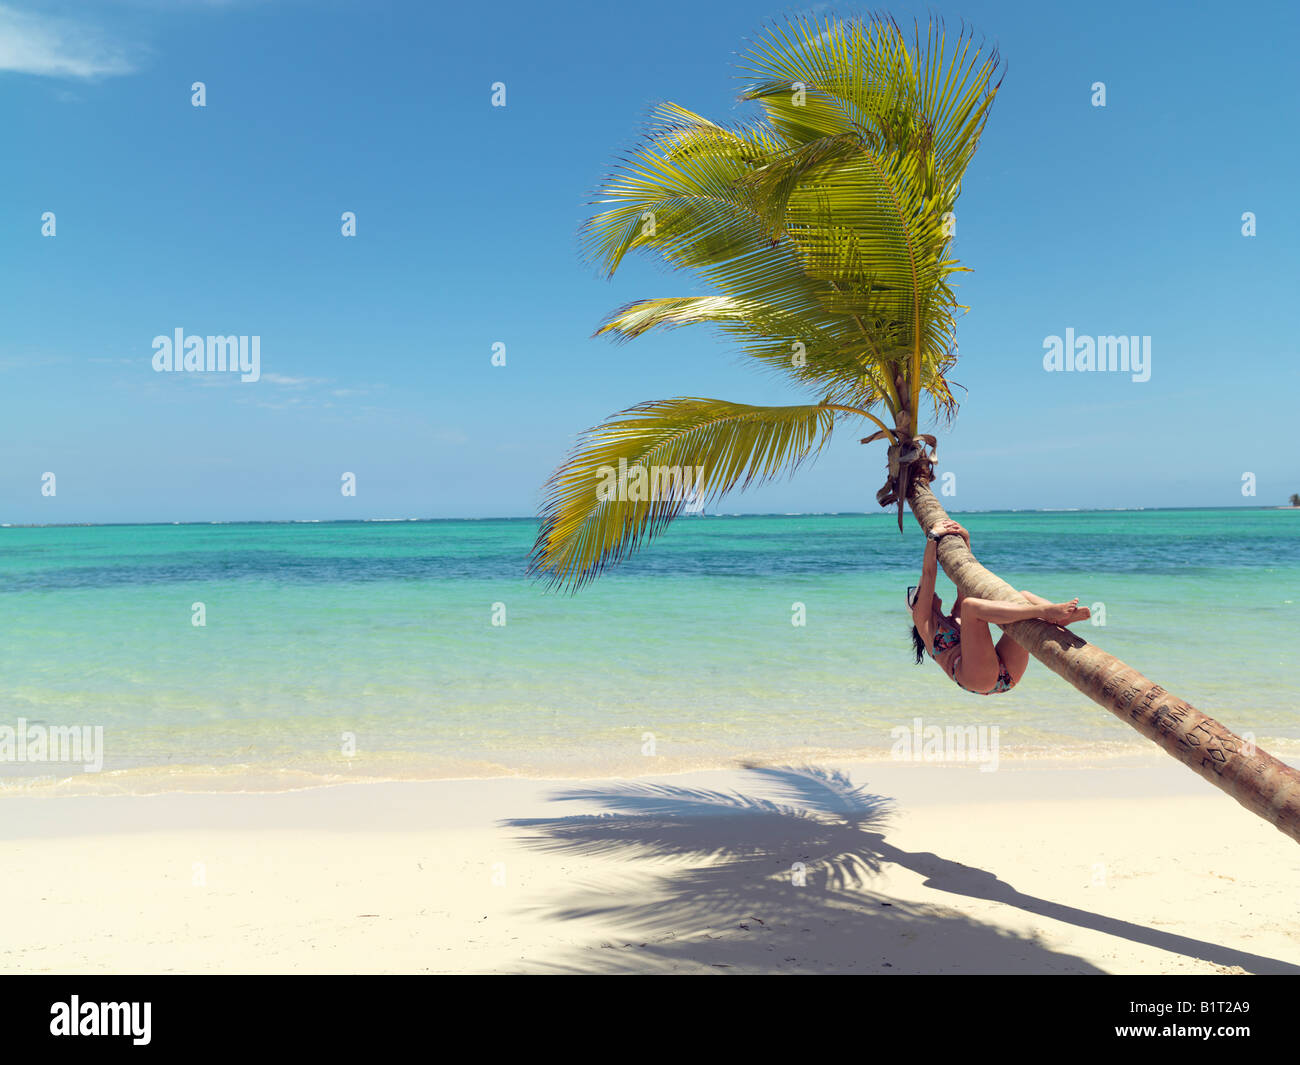 Dominican Republic Punta Cana Bavaro Beach palm tree on white sandy beach facing the sea with young woman climbing tree Stock Photo